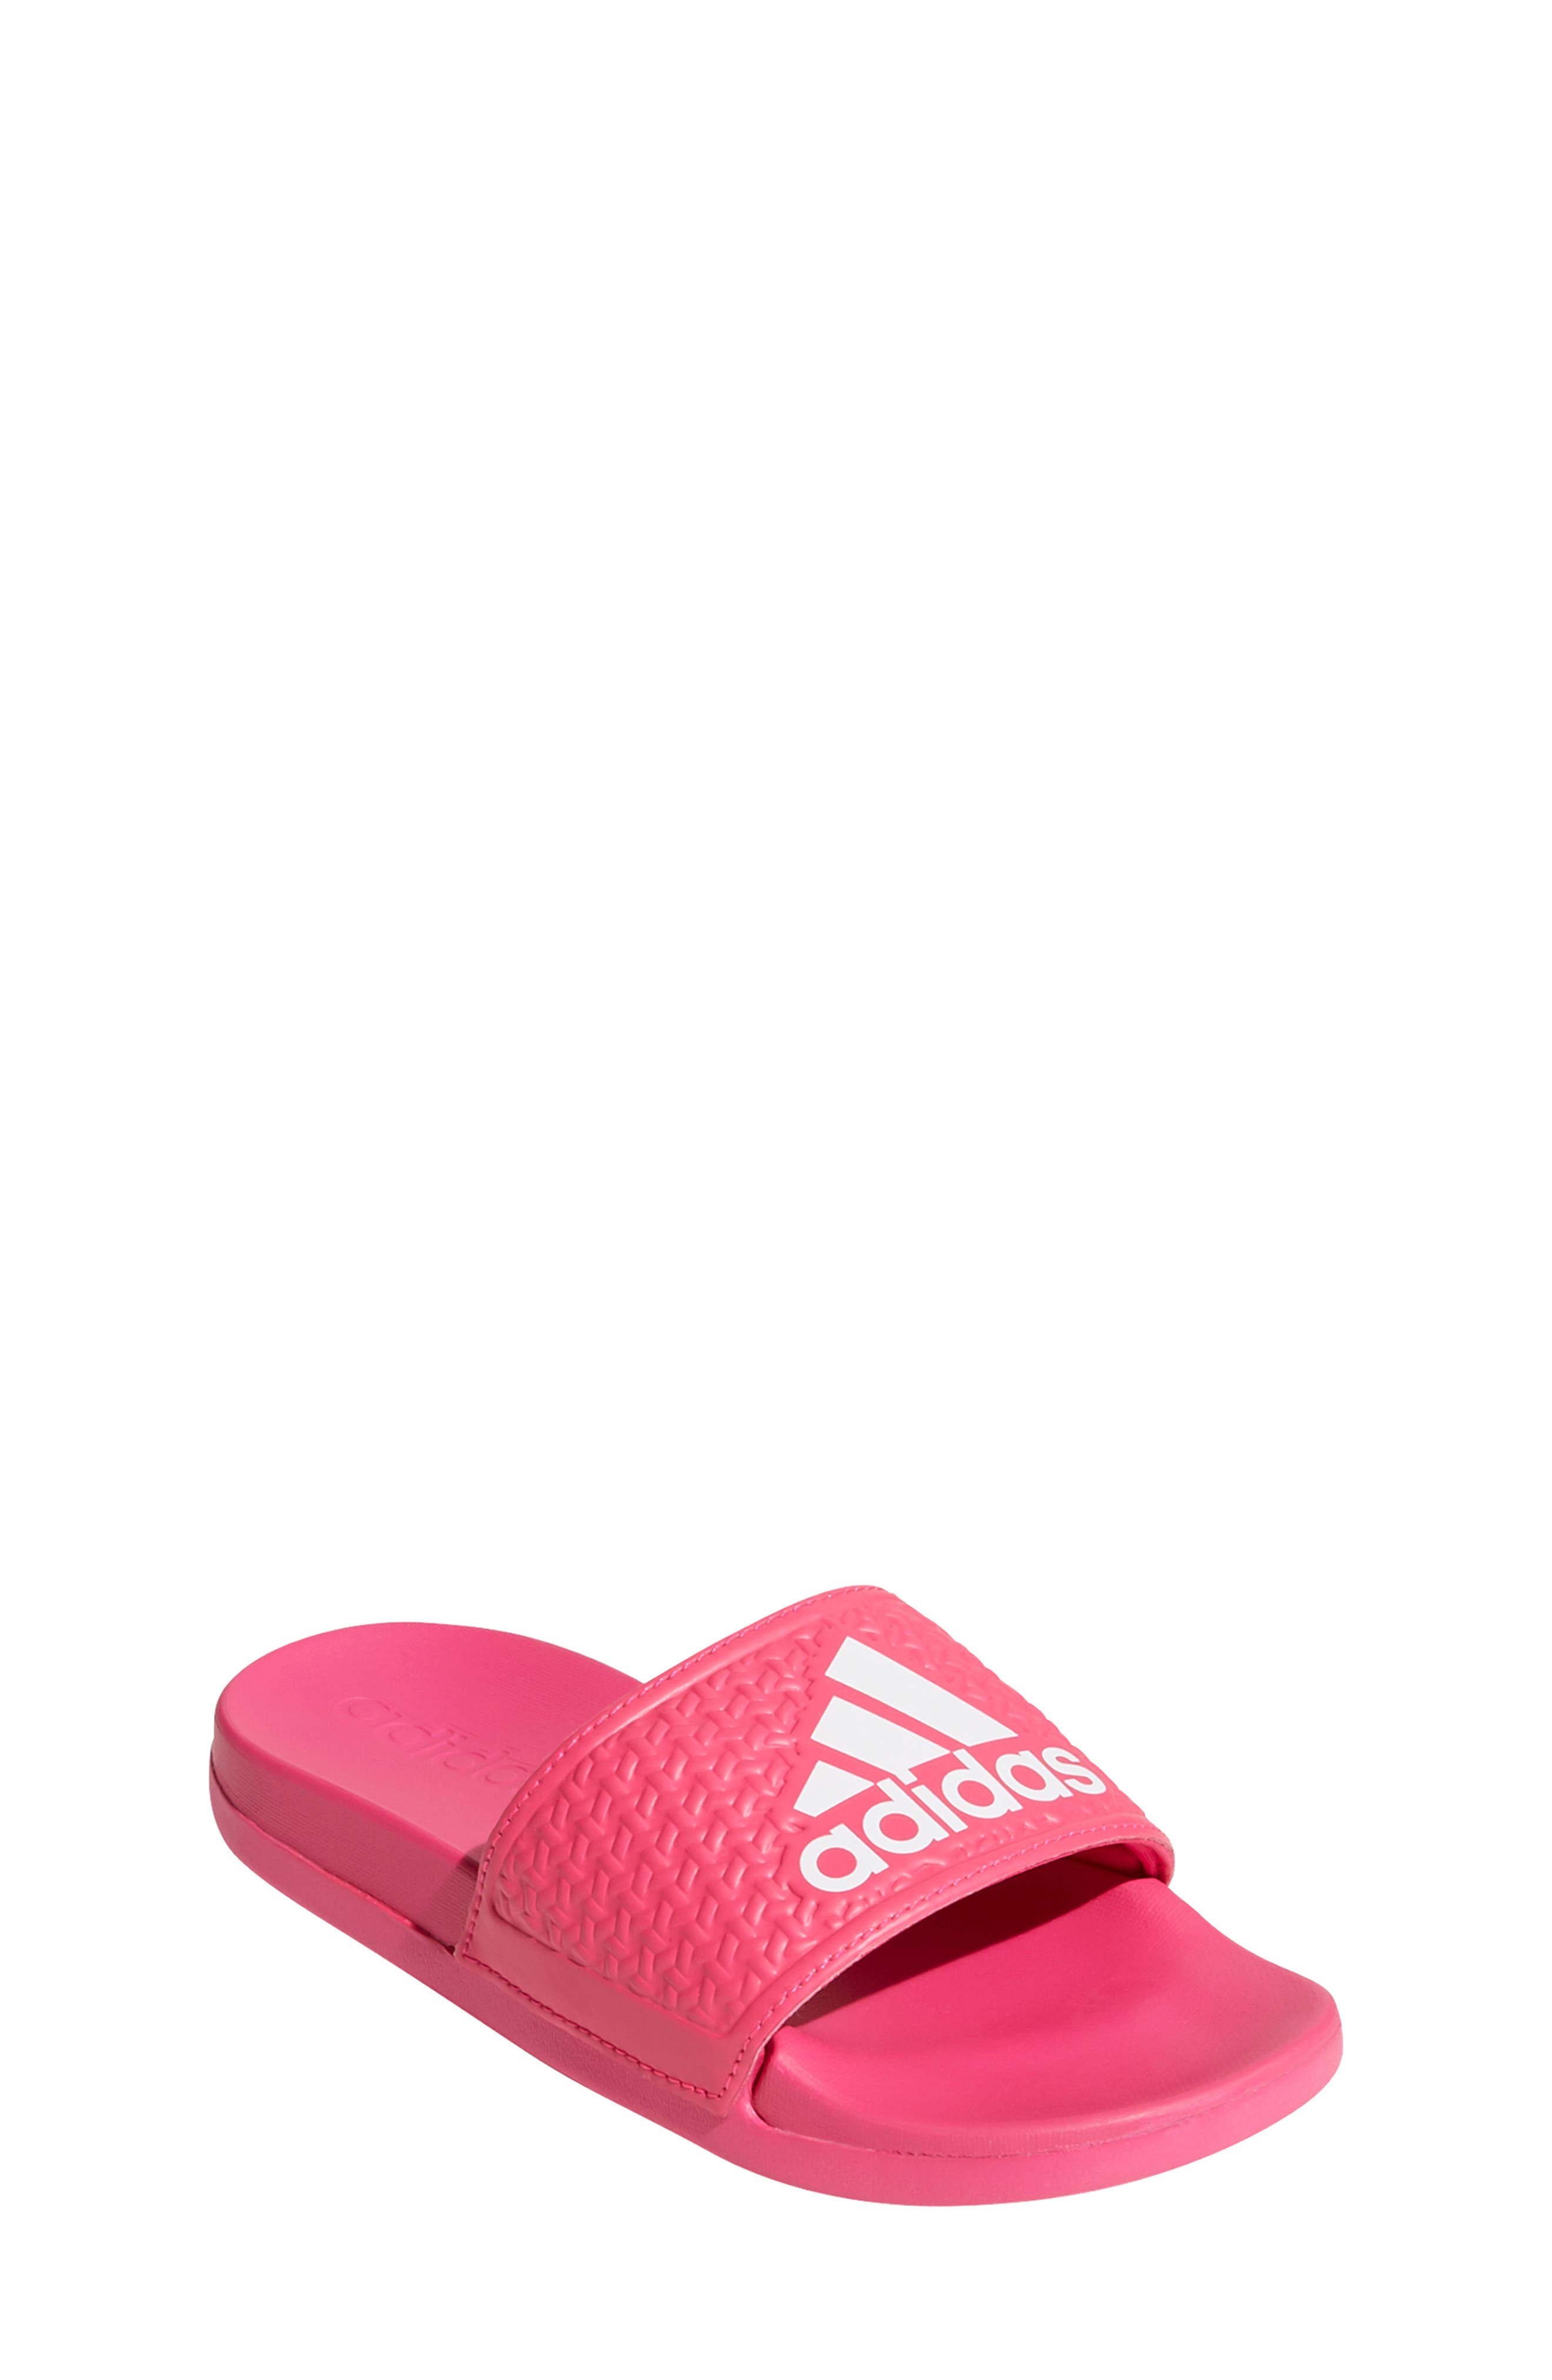 adidas toddler girl sandals